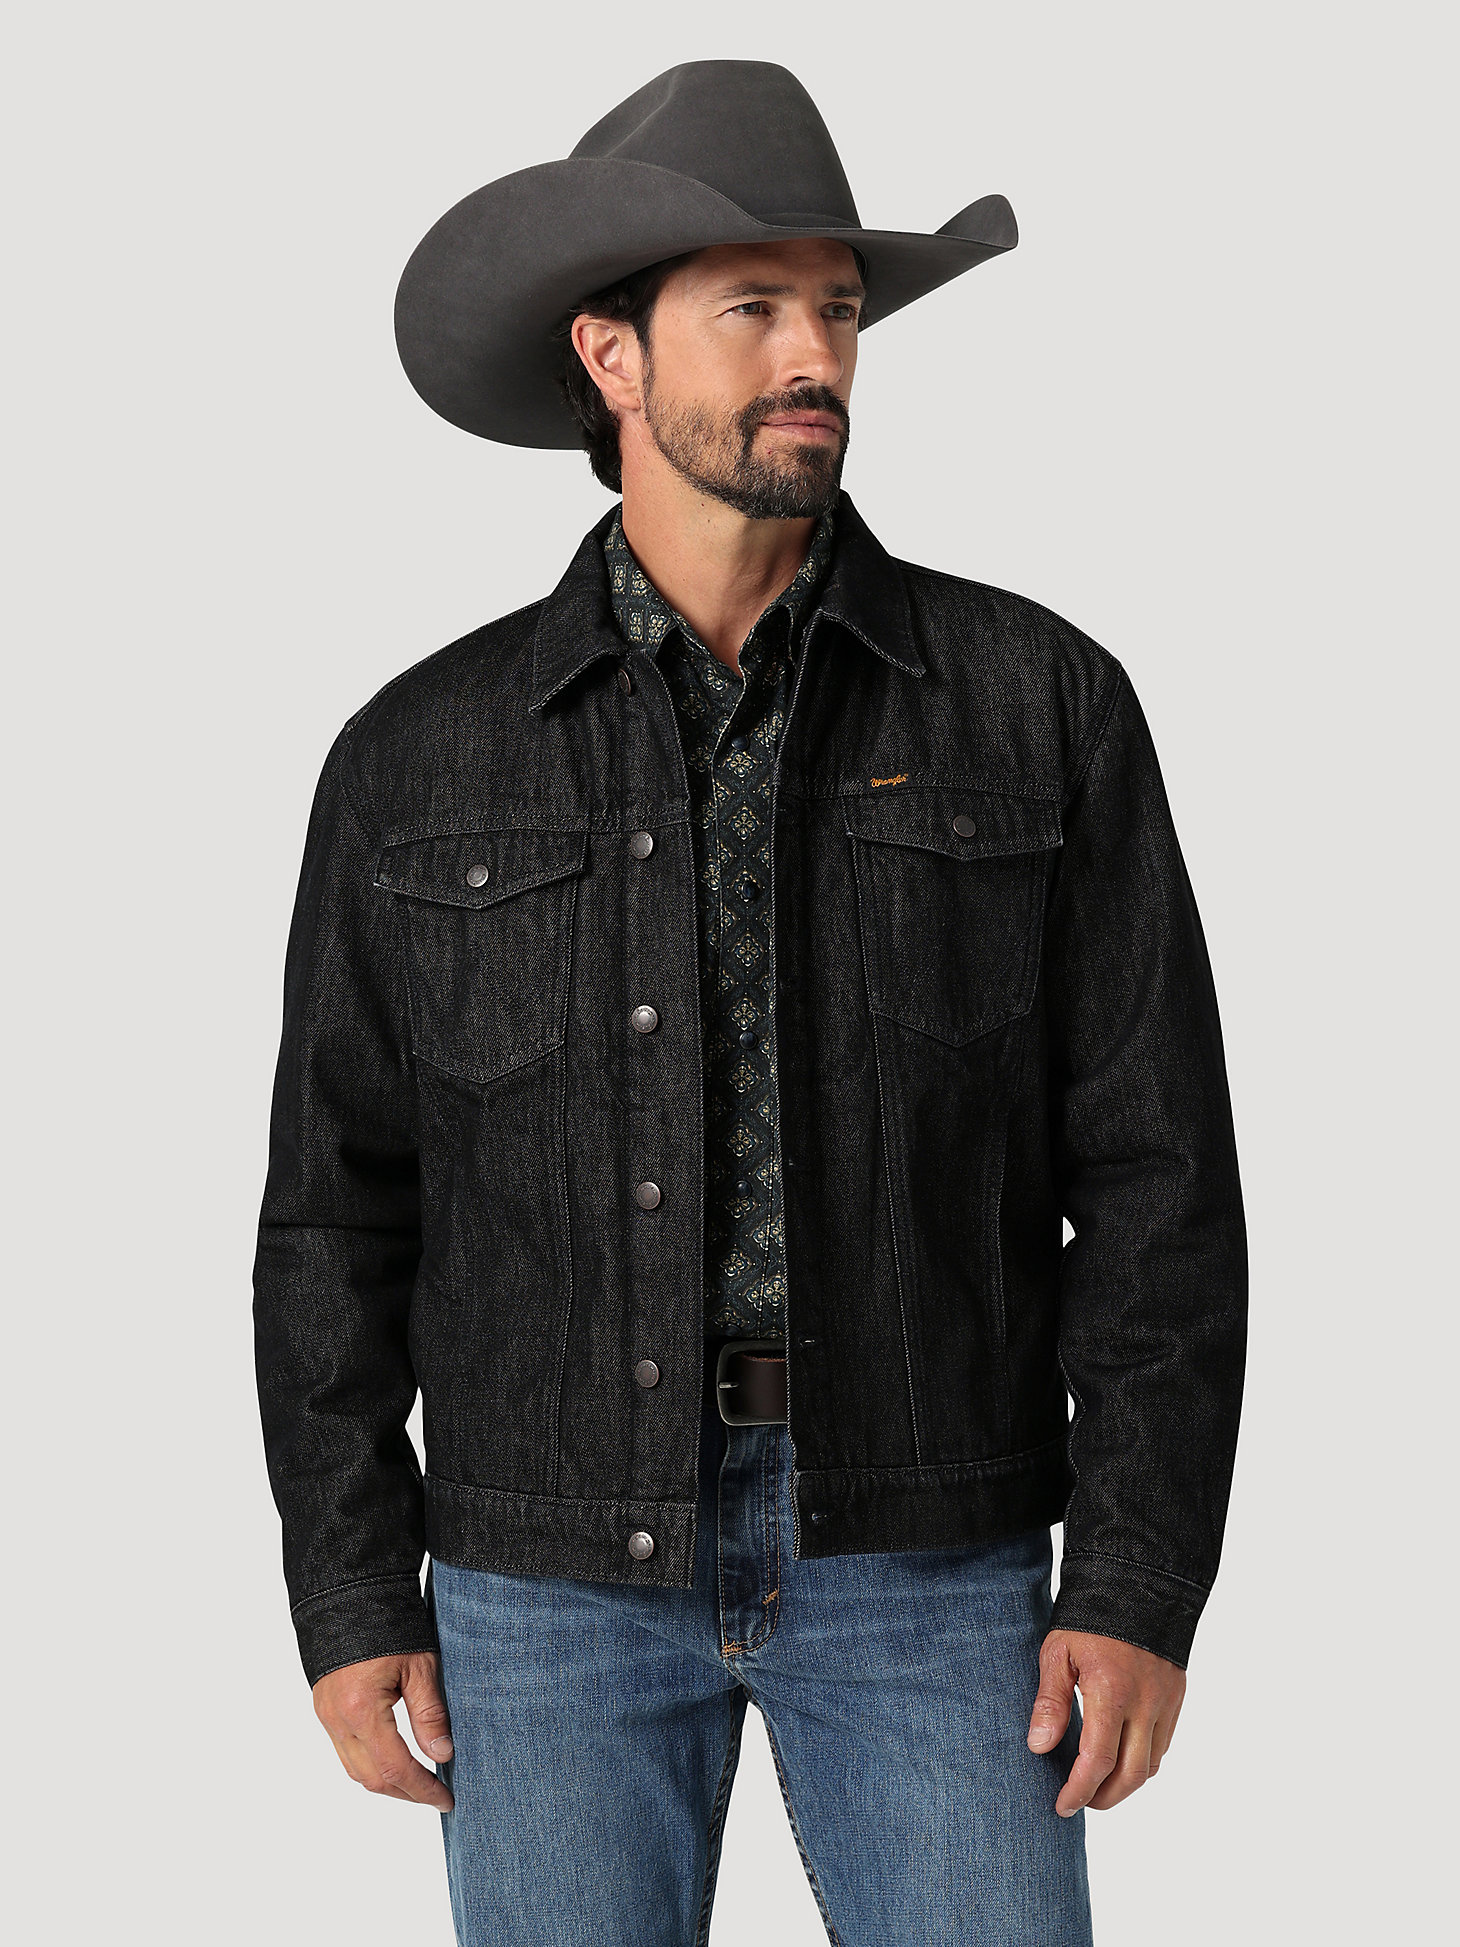 Wrangler® Cowboy Cut® Sherpa Lined Denim Jacket in Black Obelisk alternative view 4